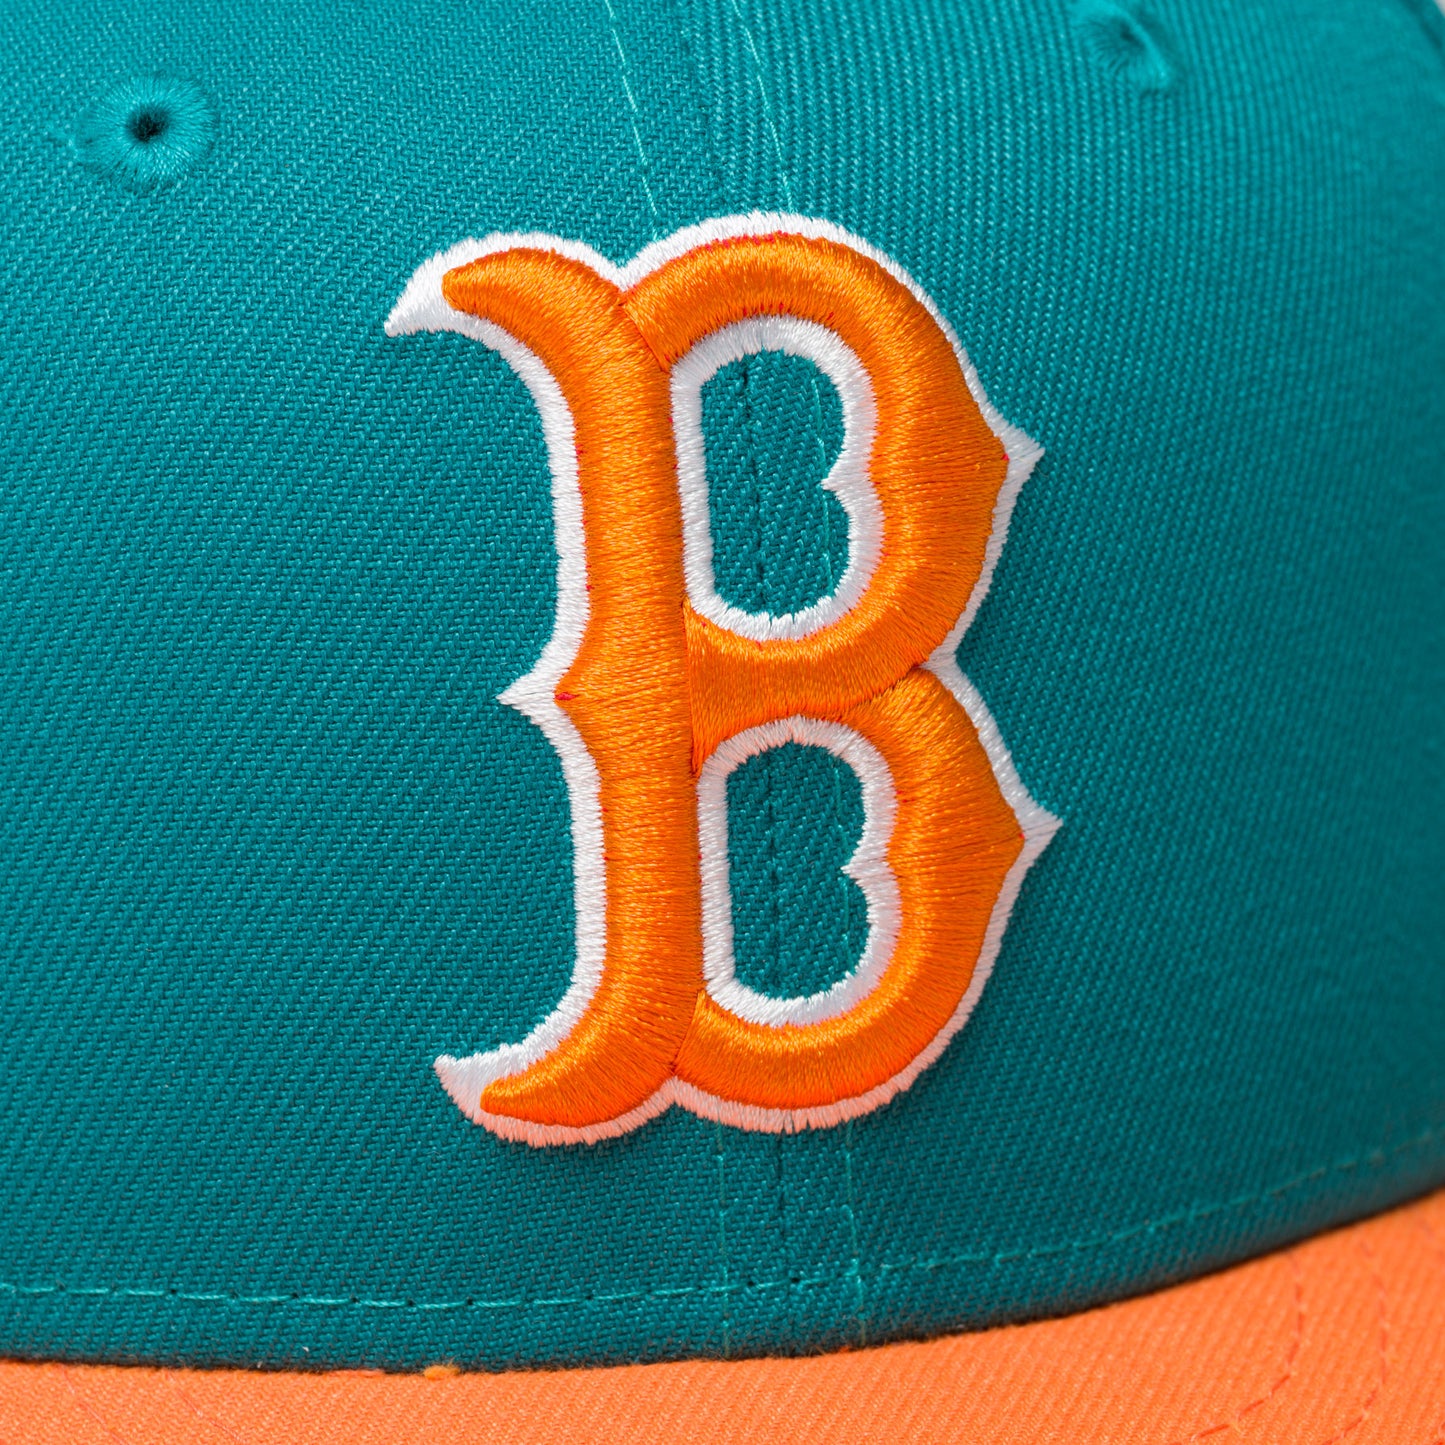 Concepts x New Era 59Fifty Boston Red Sox 1903 World Series Fitted Hat (Aqua/Orange)